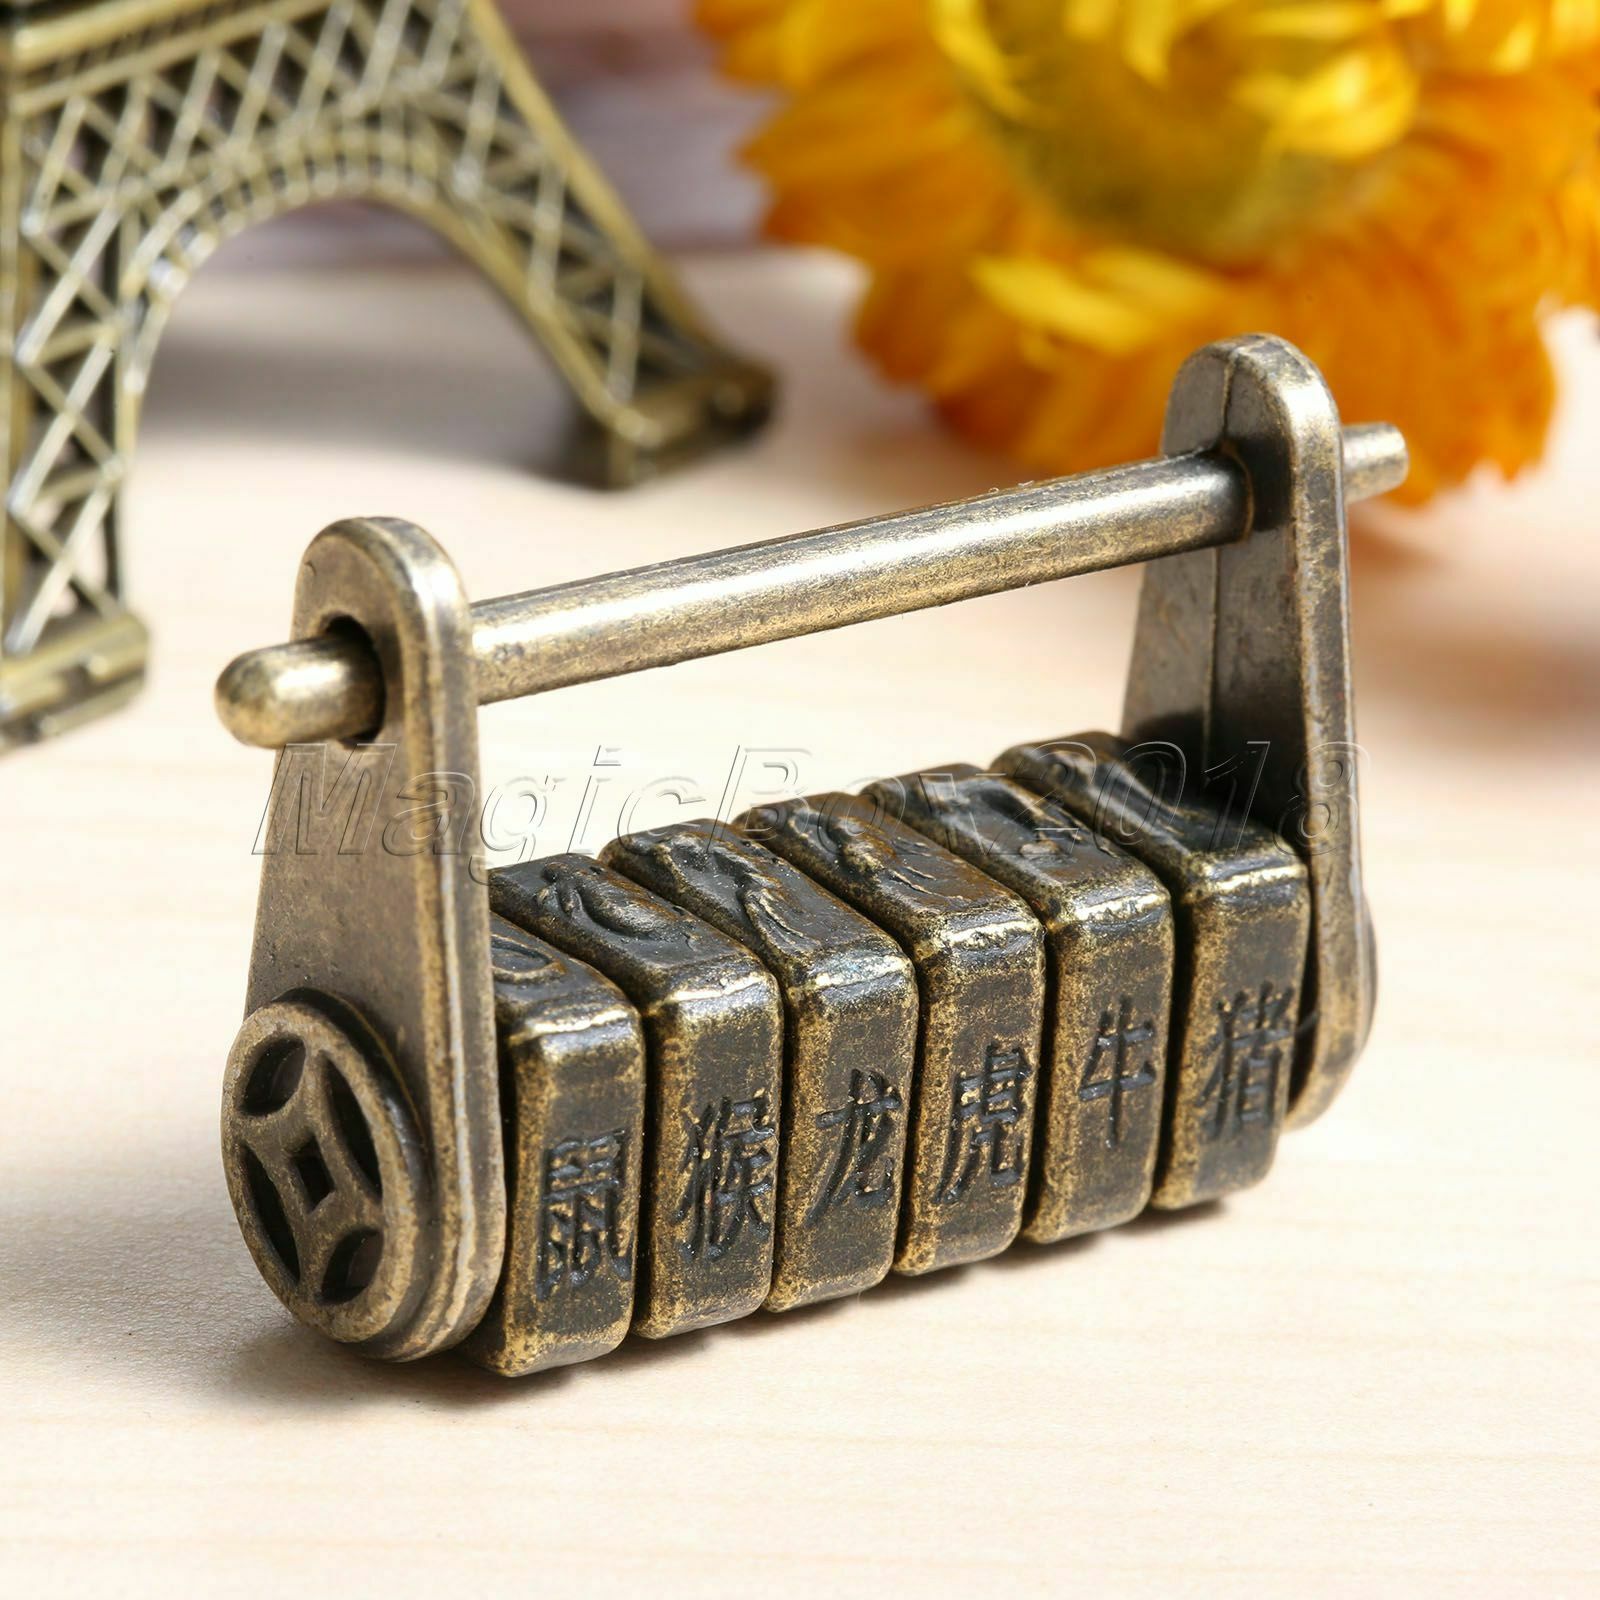 Unique Chinese Zodiac Password Padlock Keyed Lock Jewelry Box Drawer Decorative